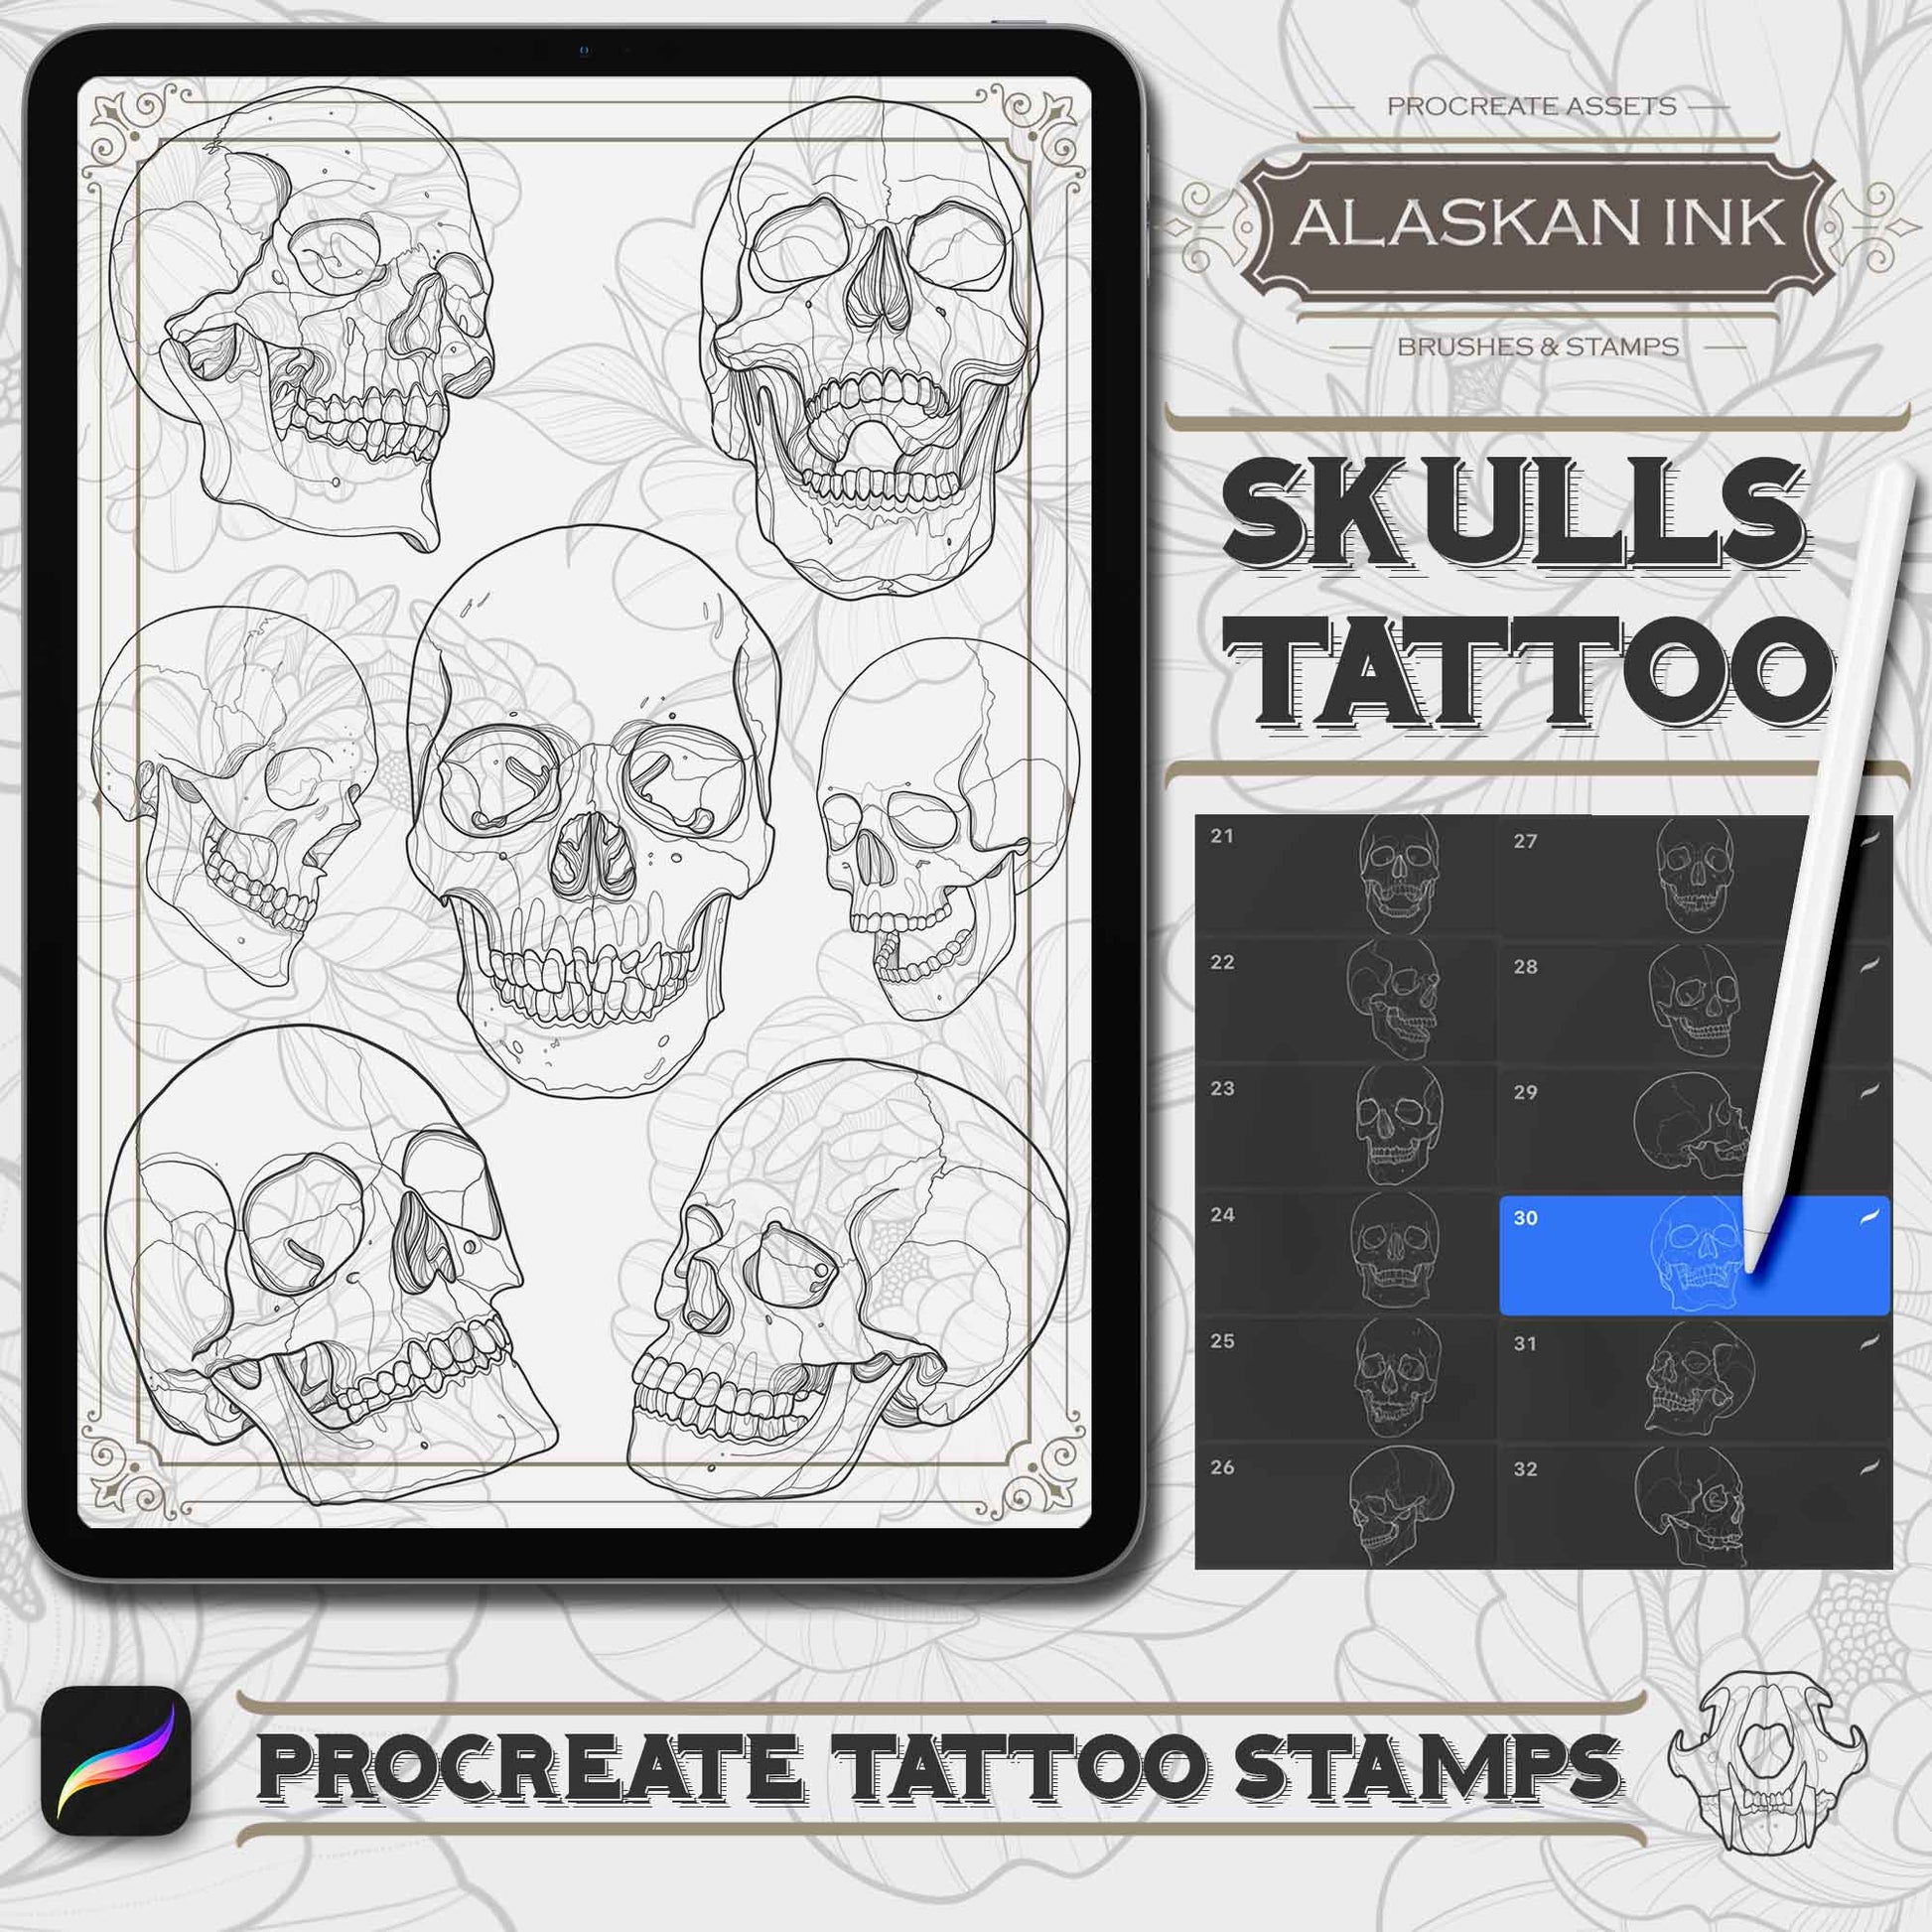 50 Skulls Tattoo Procreate bruhses for iPad and iPad pro by Alaskan Ink Studio